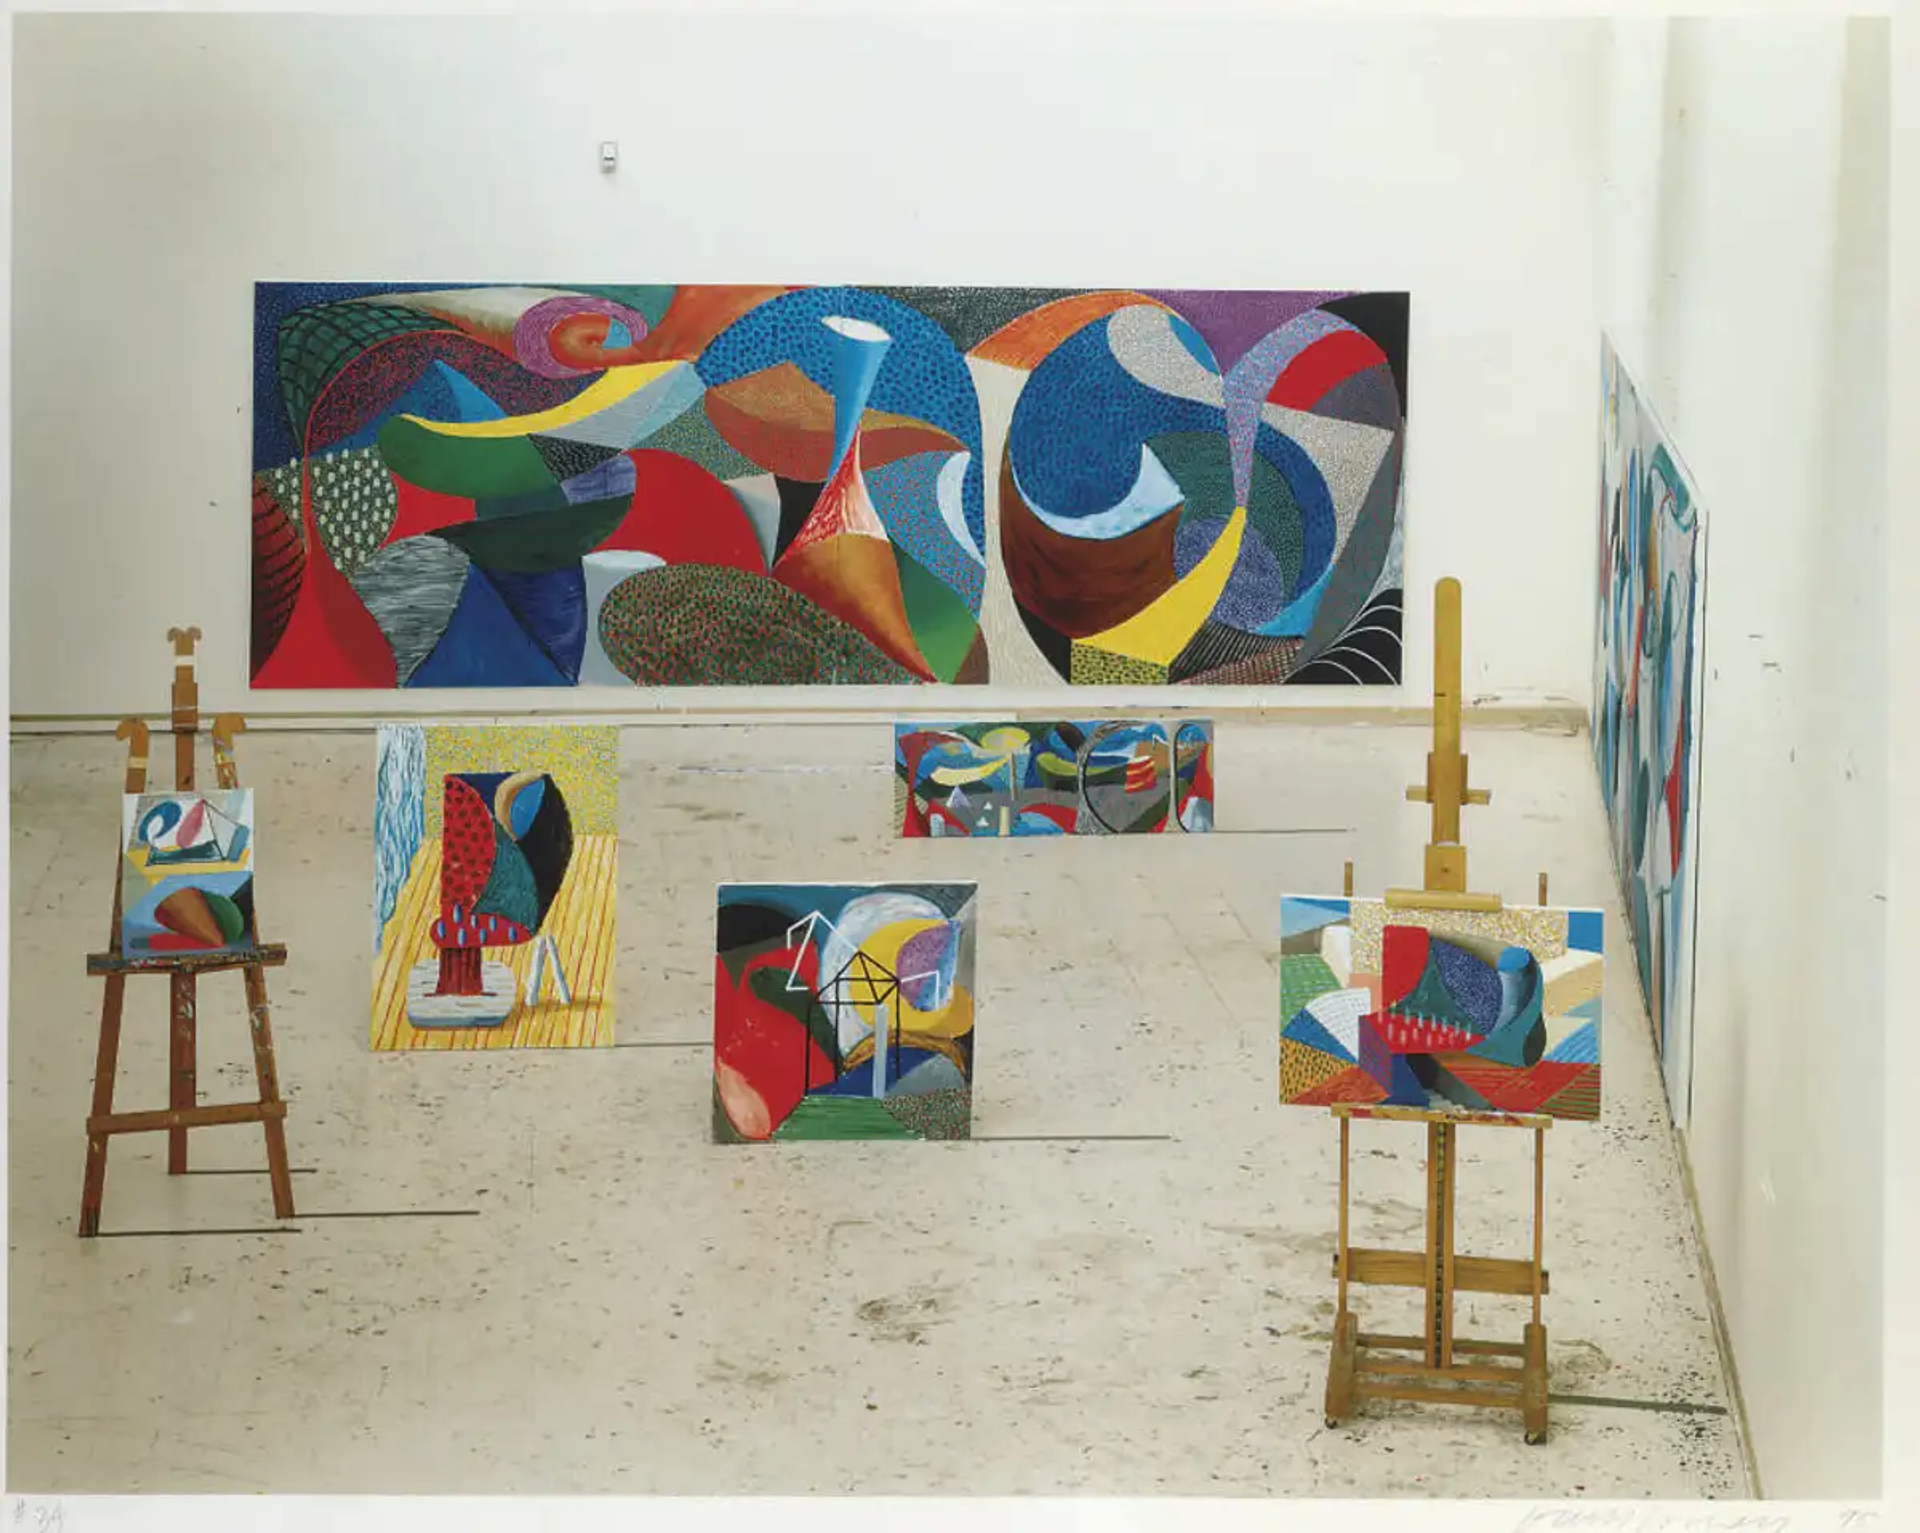 David Hockney’s The Studio, March 16th 1995. A digital print of the interior of David Hockney’s studio with multiple artworks on display.